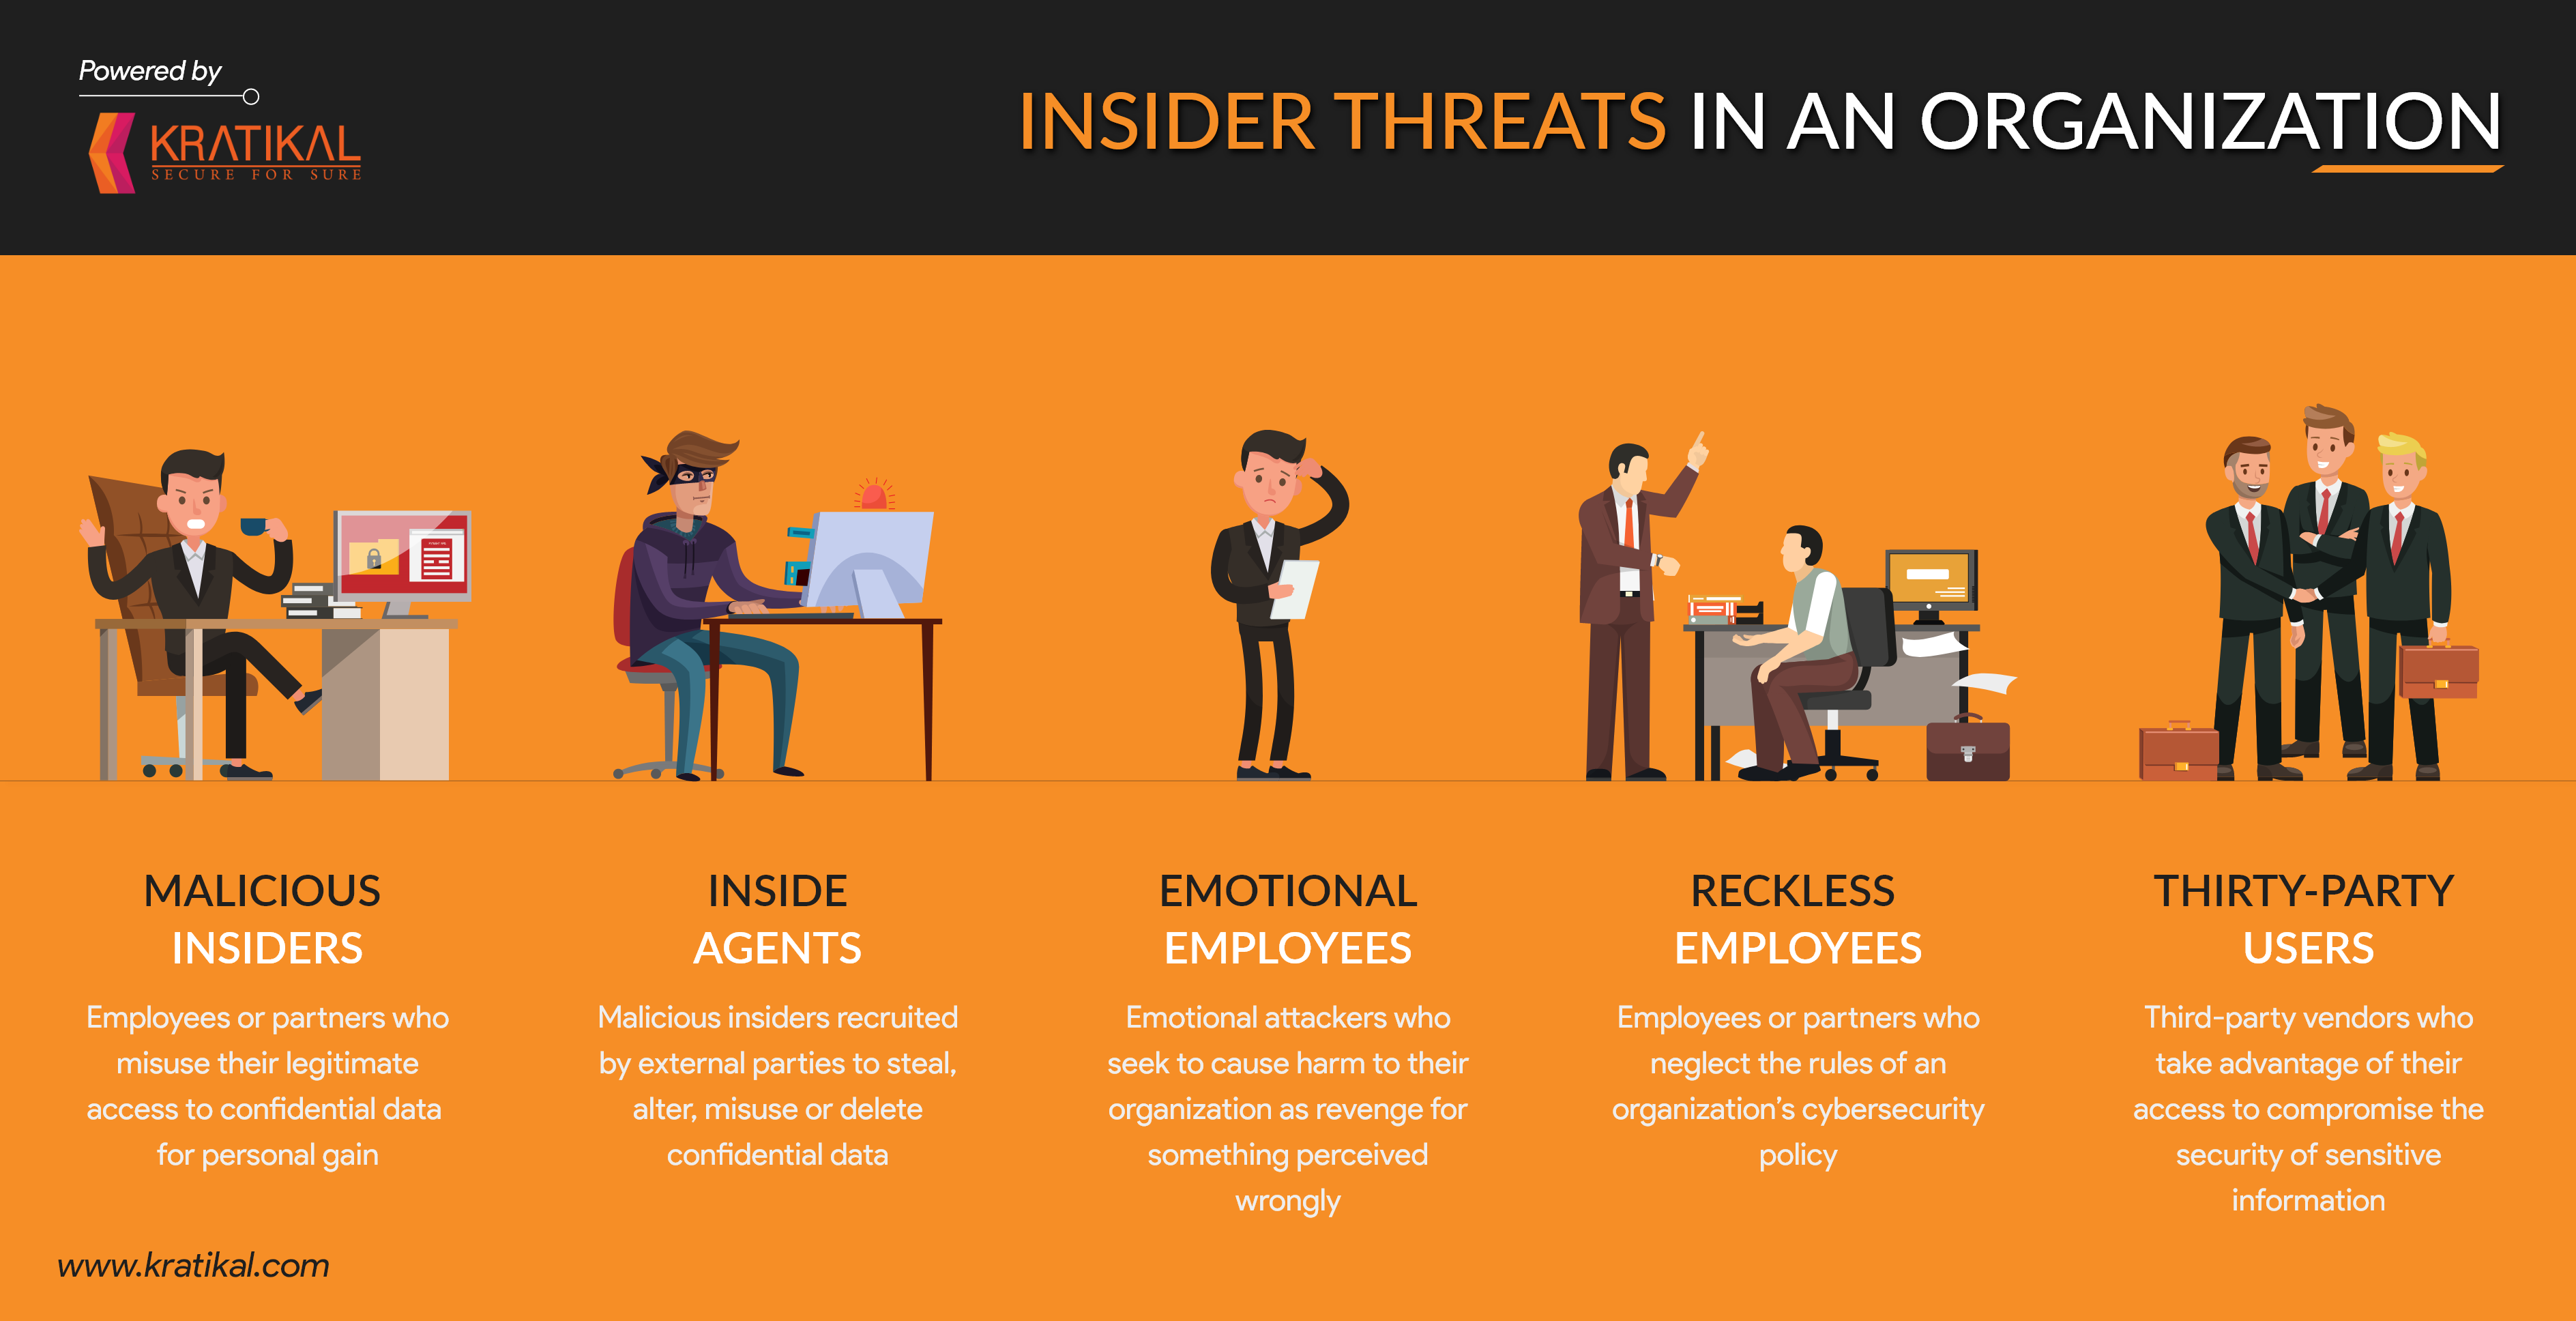 Insider Threats Risks Identification And Prevention